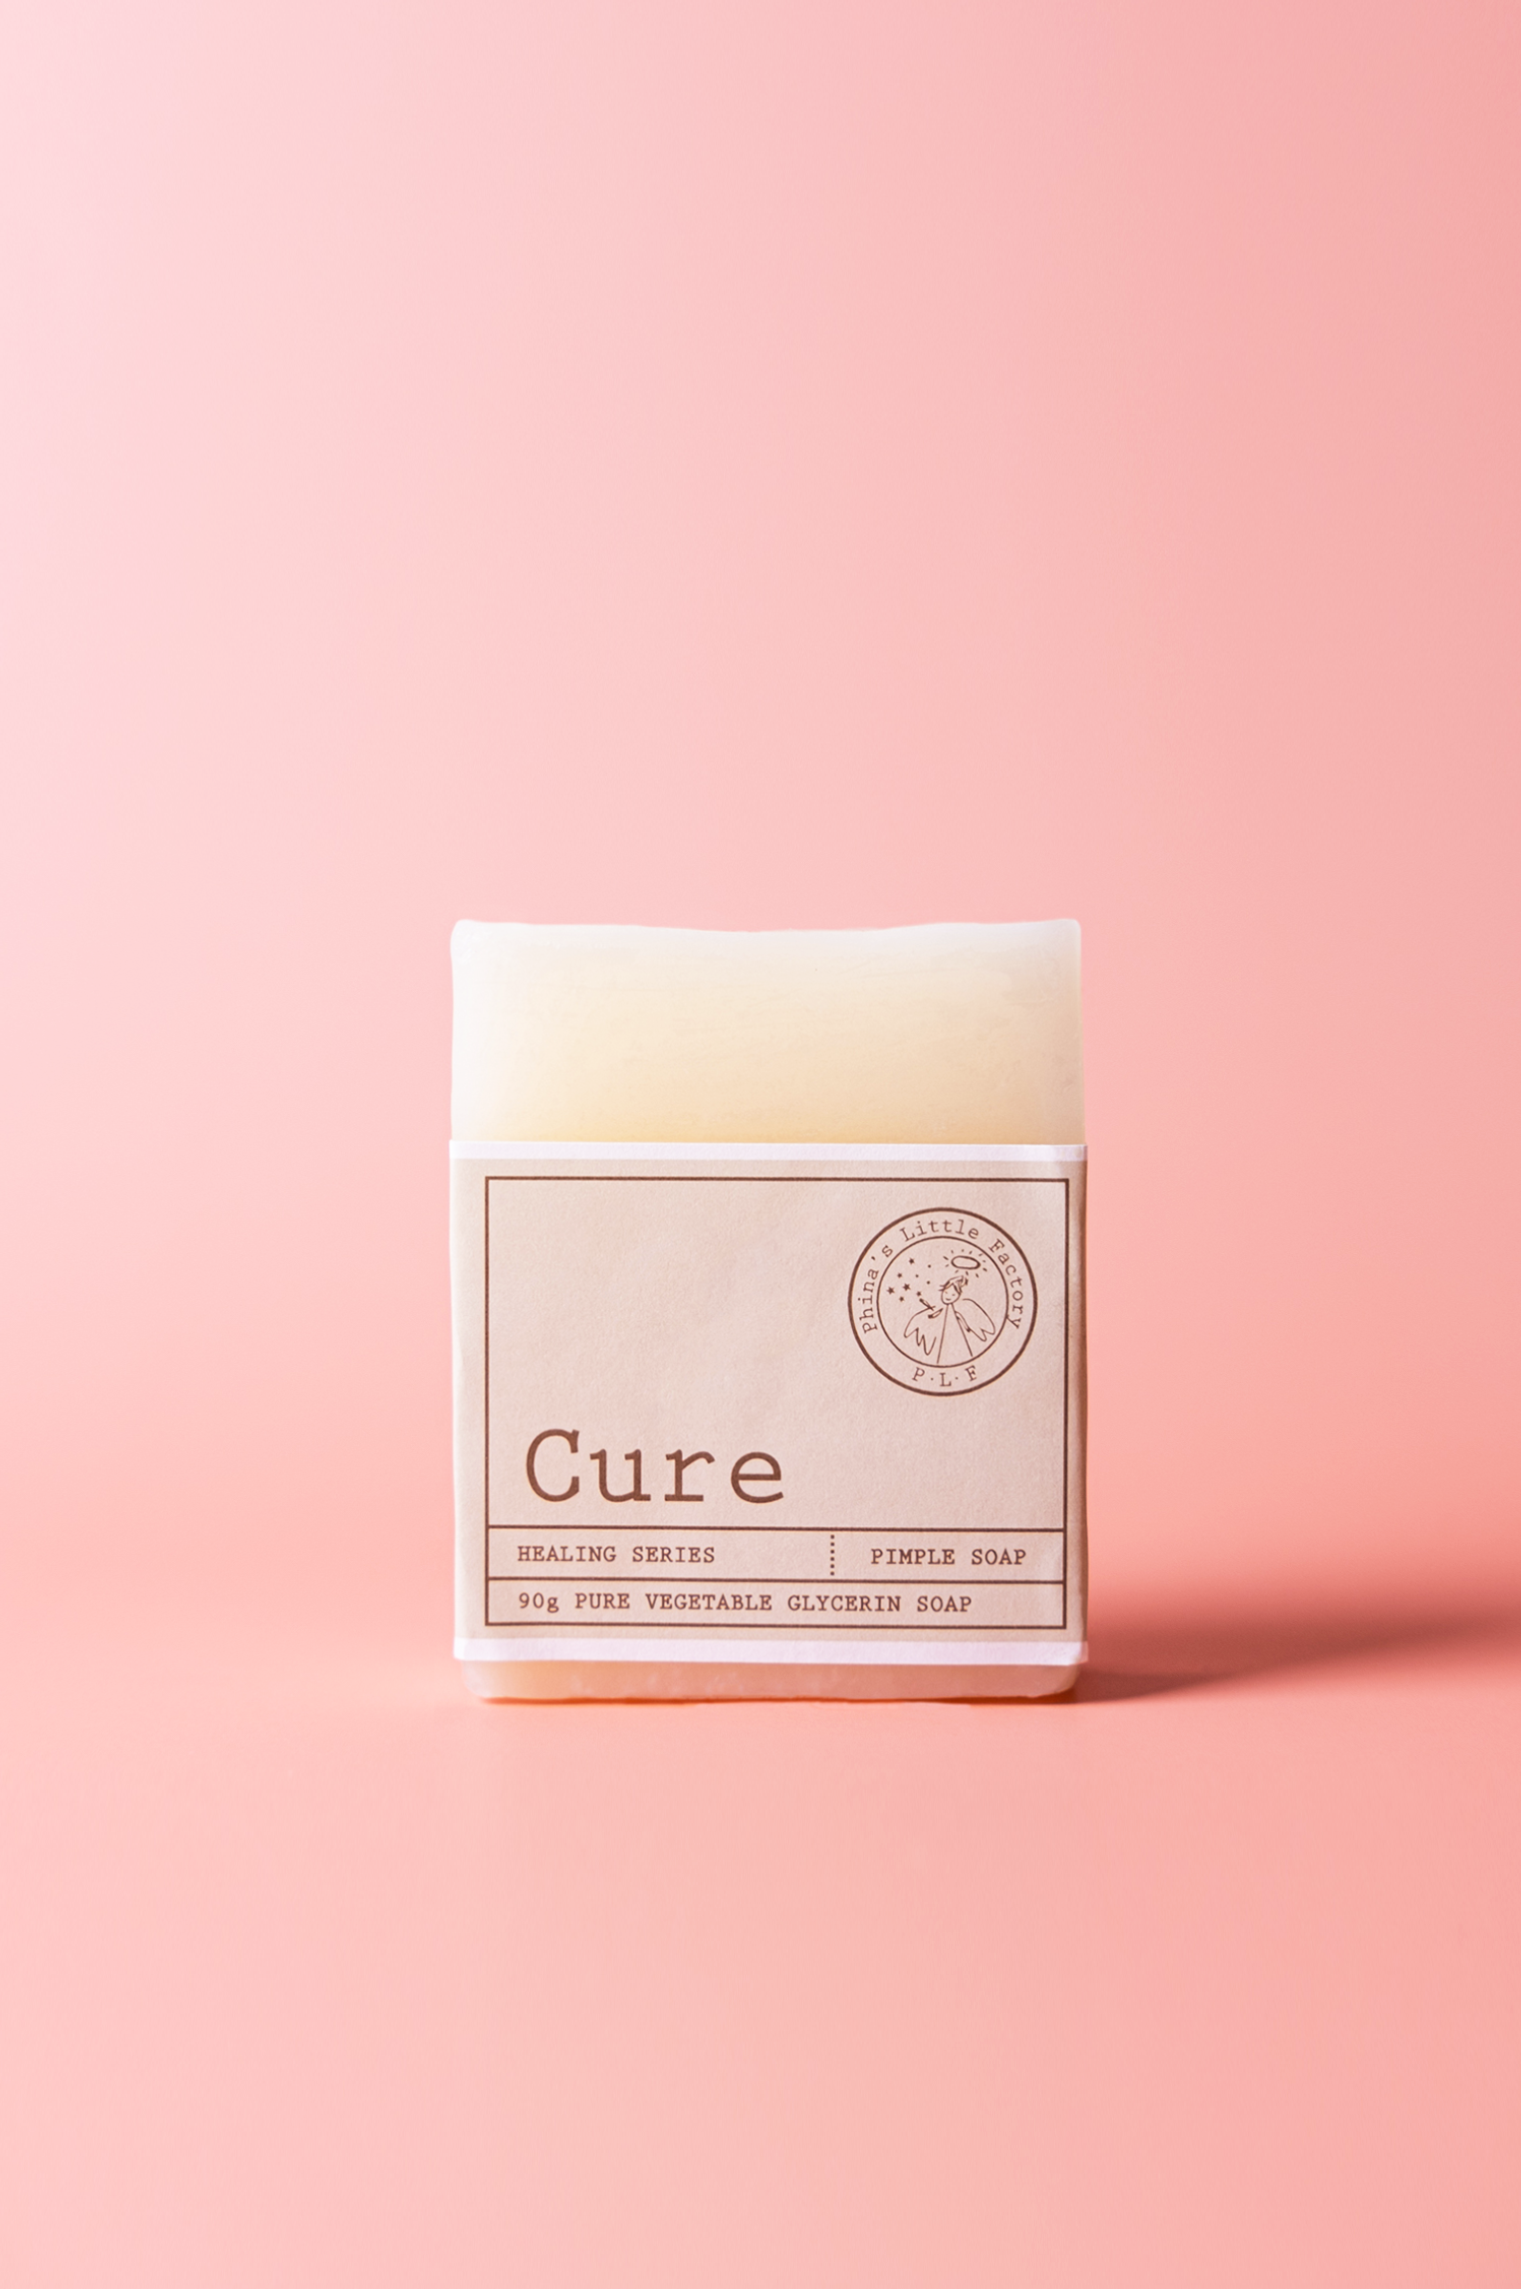 Cure Pimple Soap